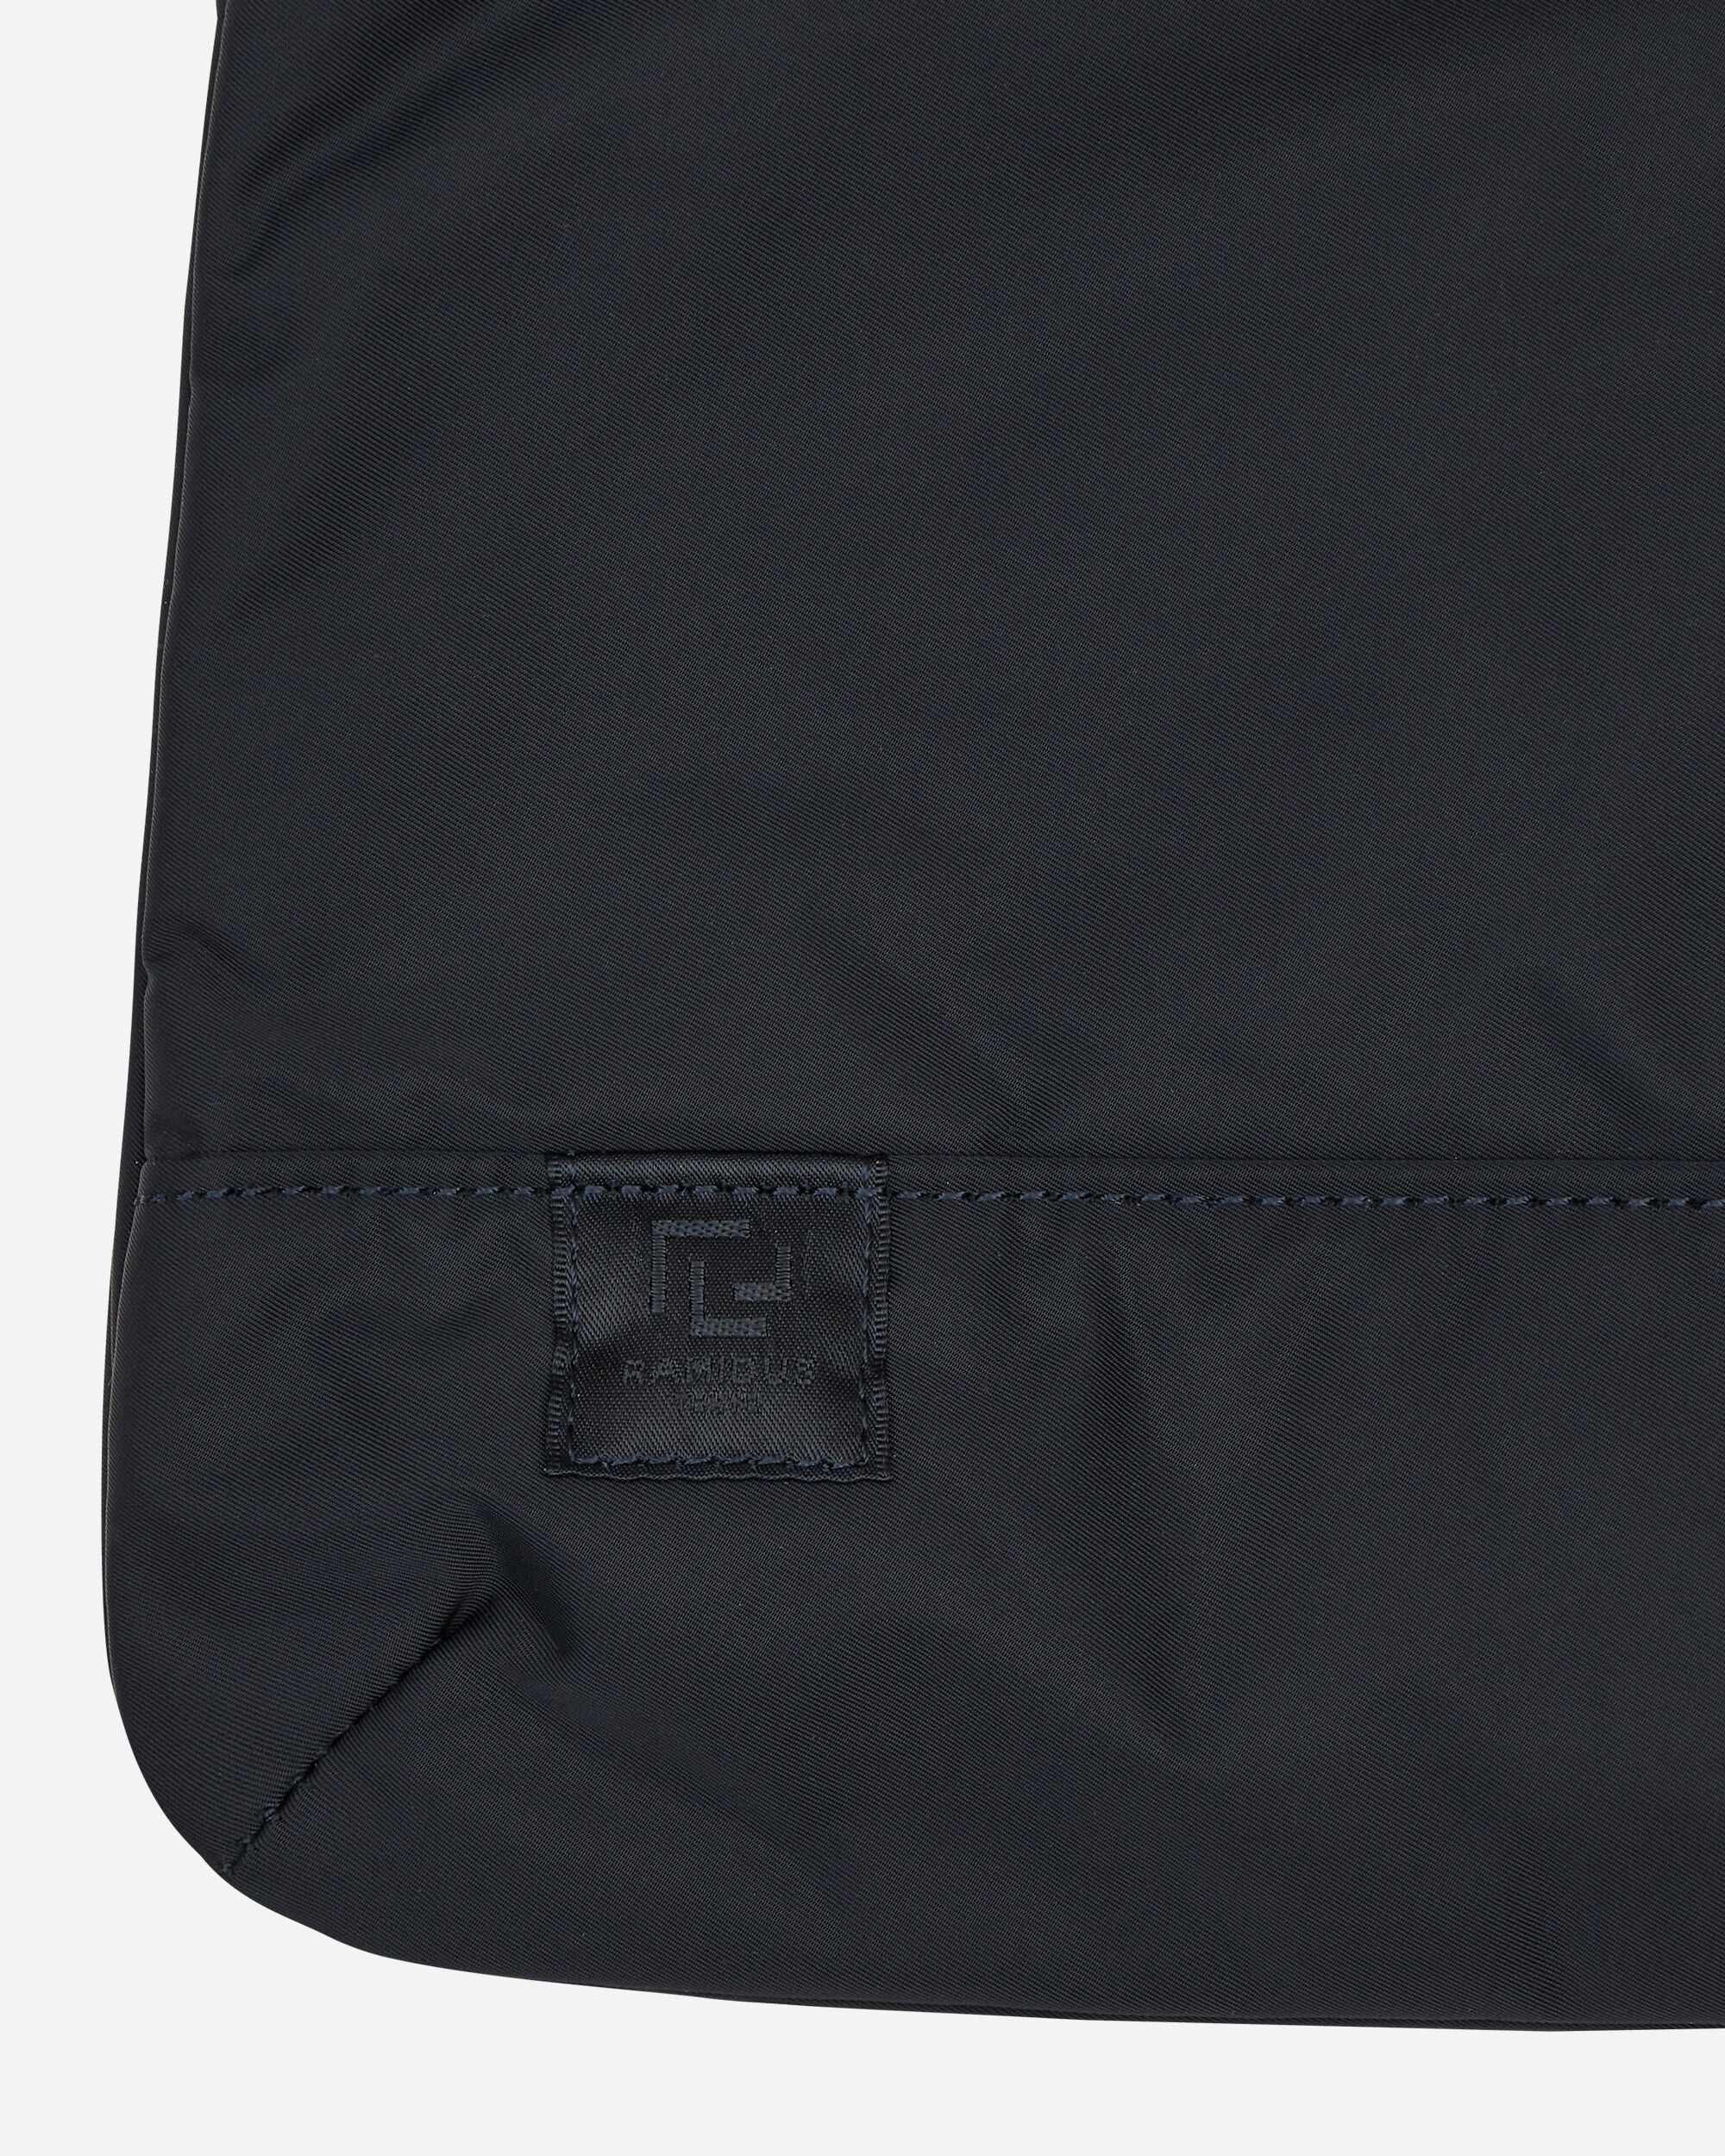 Ramidus 2Way Shoulder Bag Black Bags and Backpacks Shoulder B022025 1